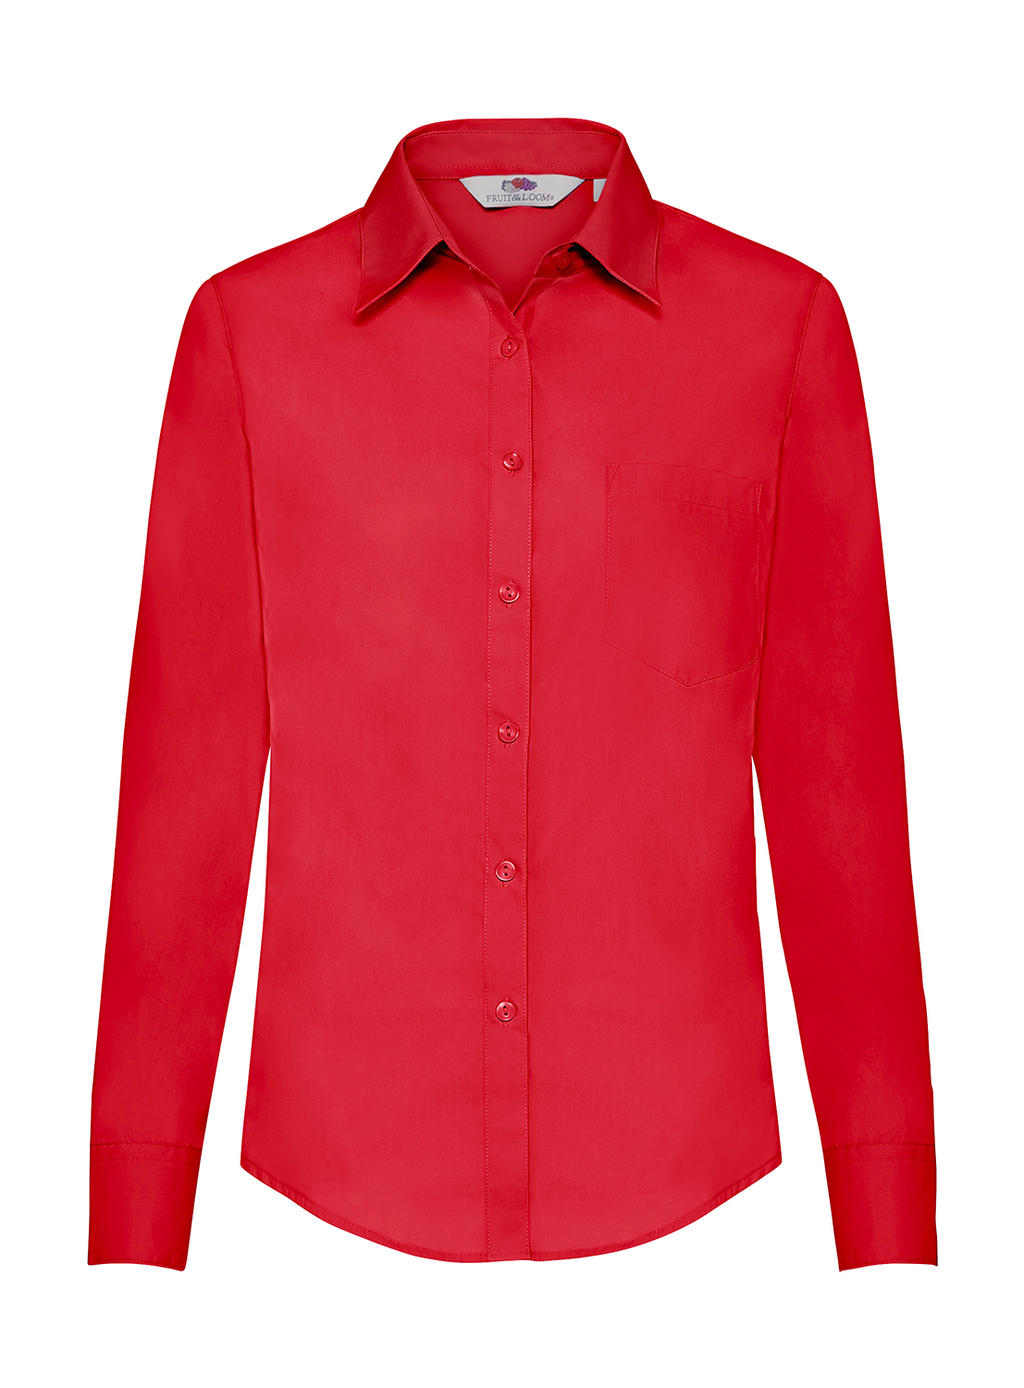  Ladies Poplin Shirt LS in Farbe Red